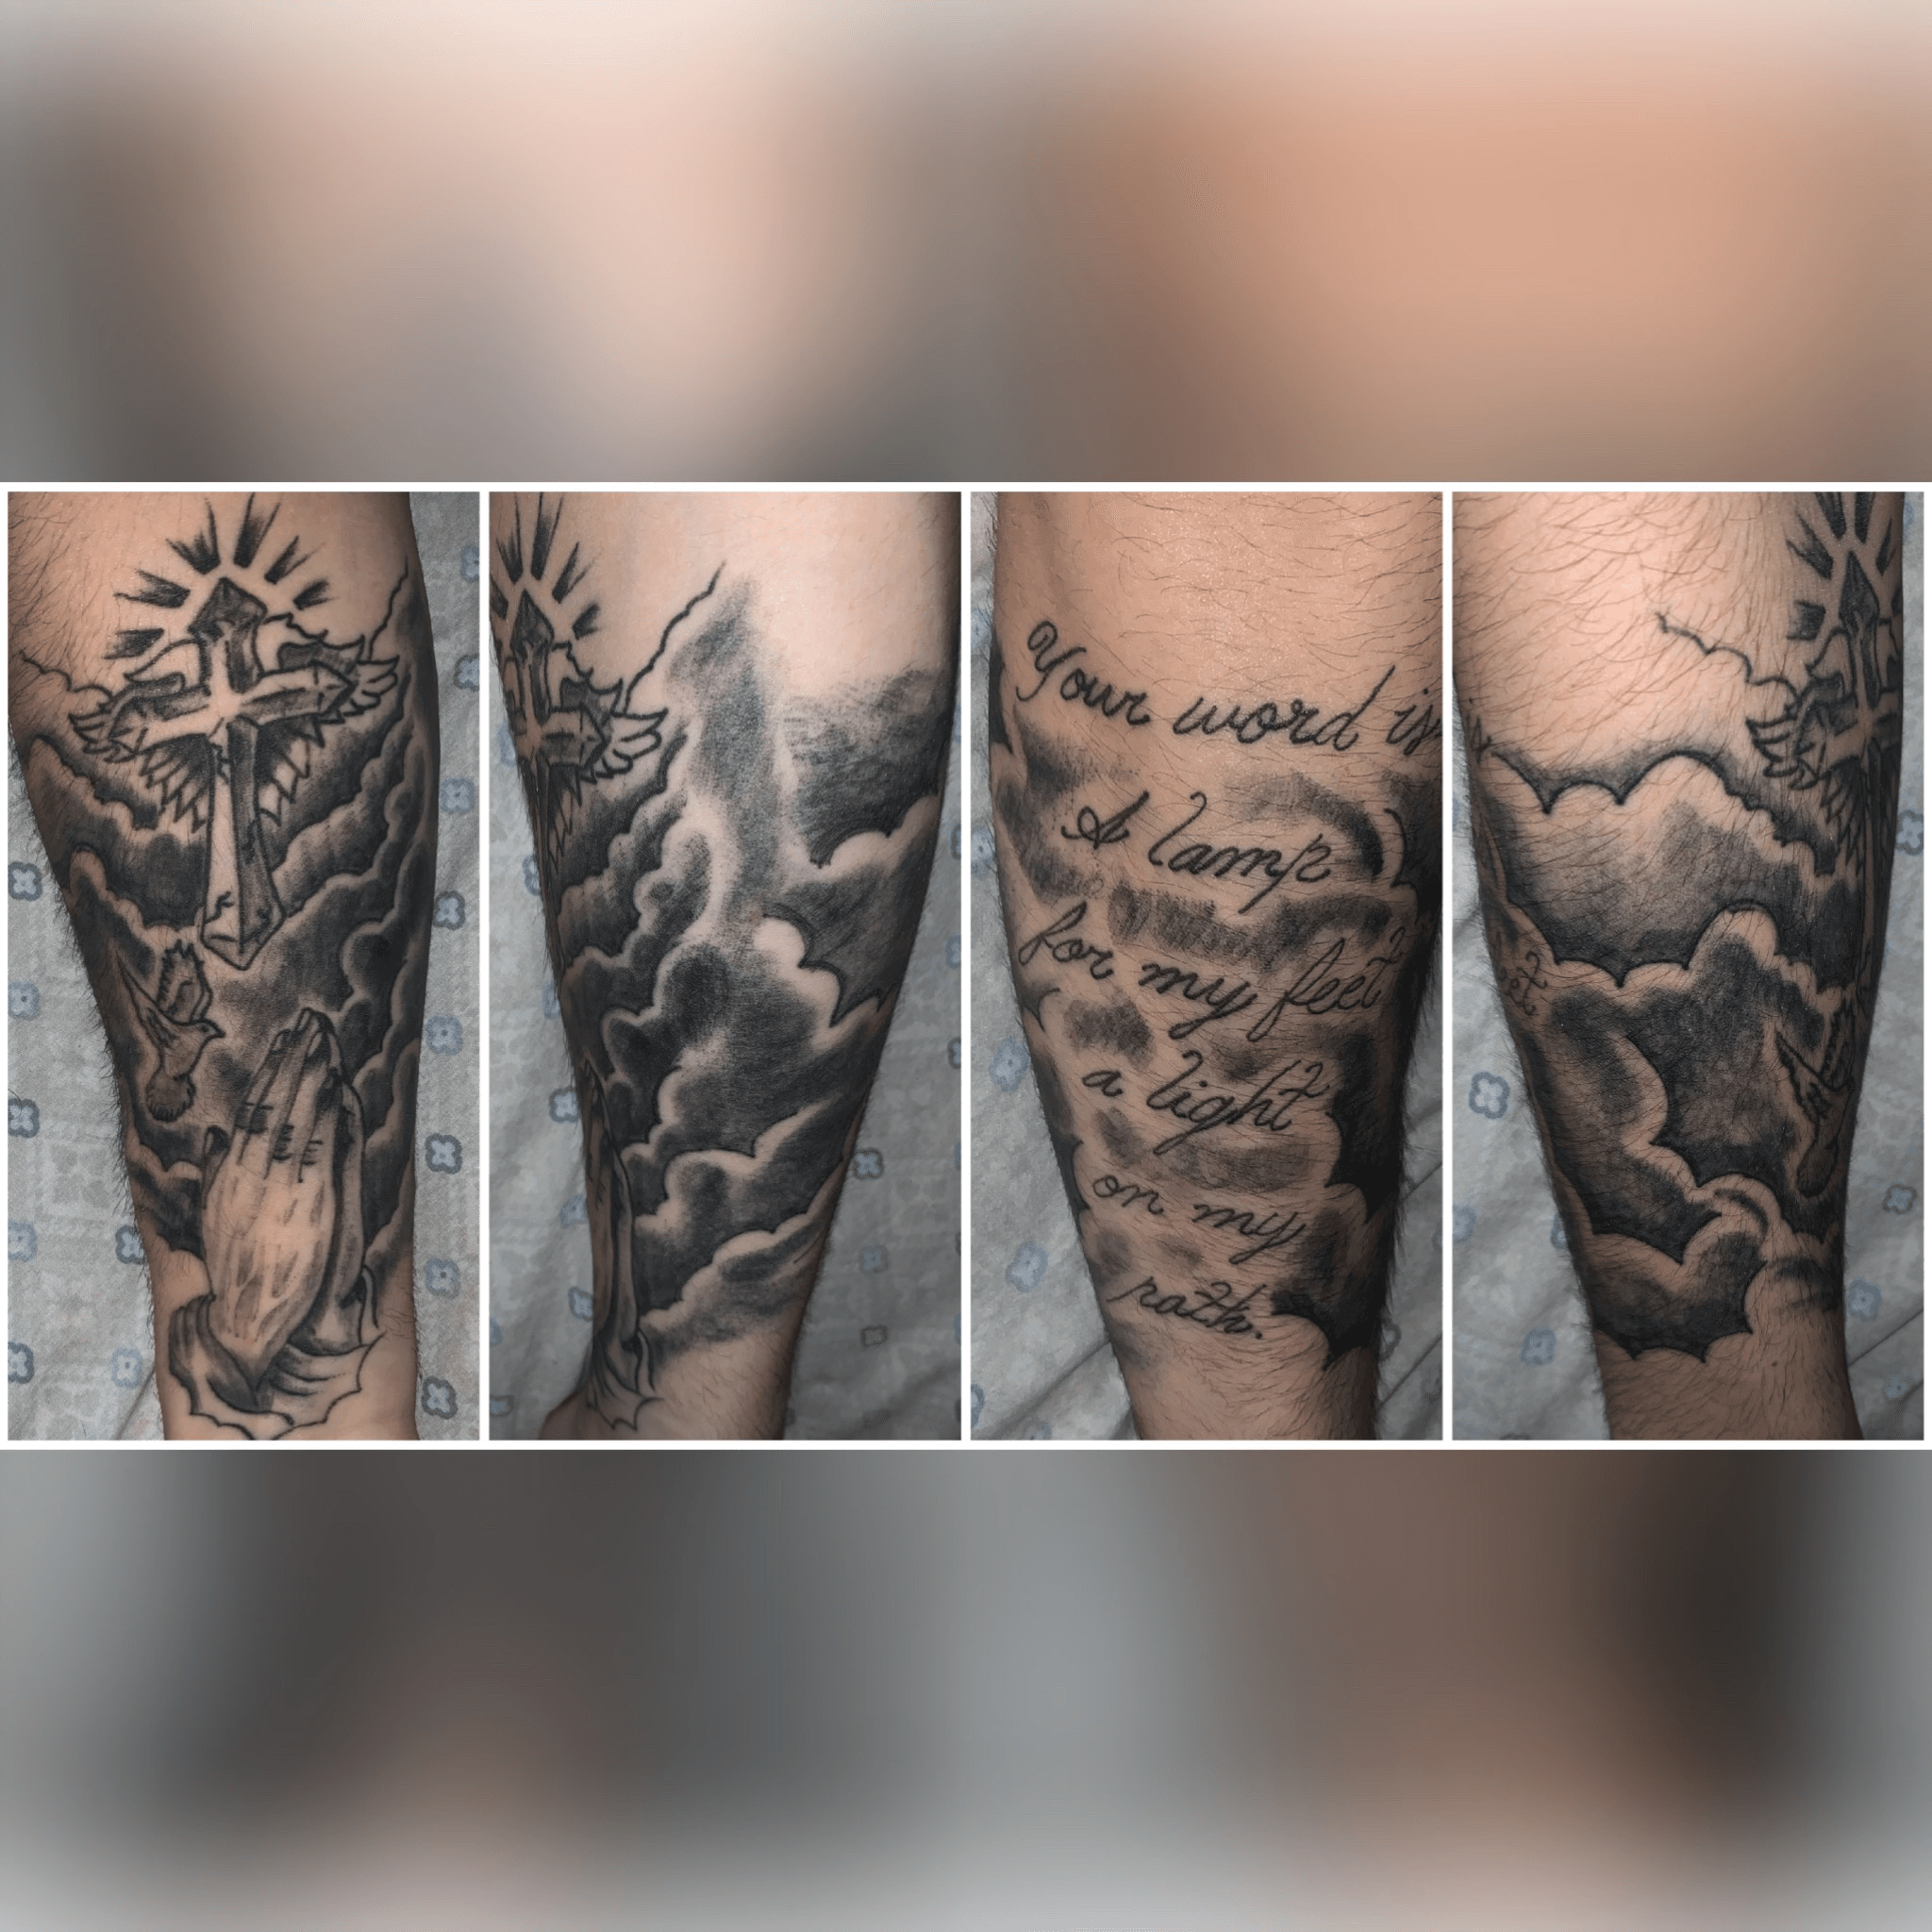 Tattoo uploaded by allxrt • Half sleeve on forearm • Tattoodo